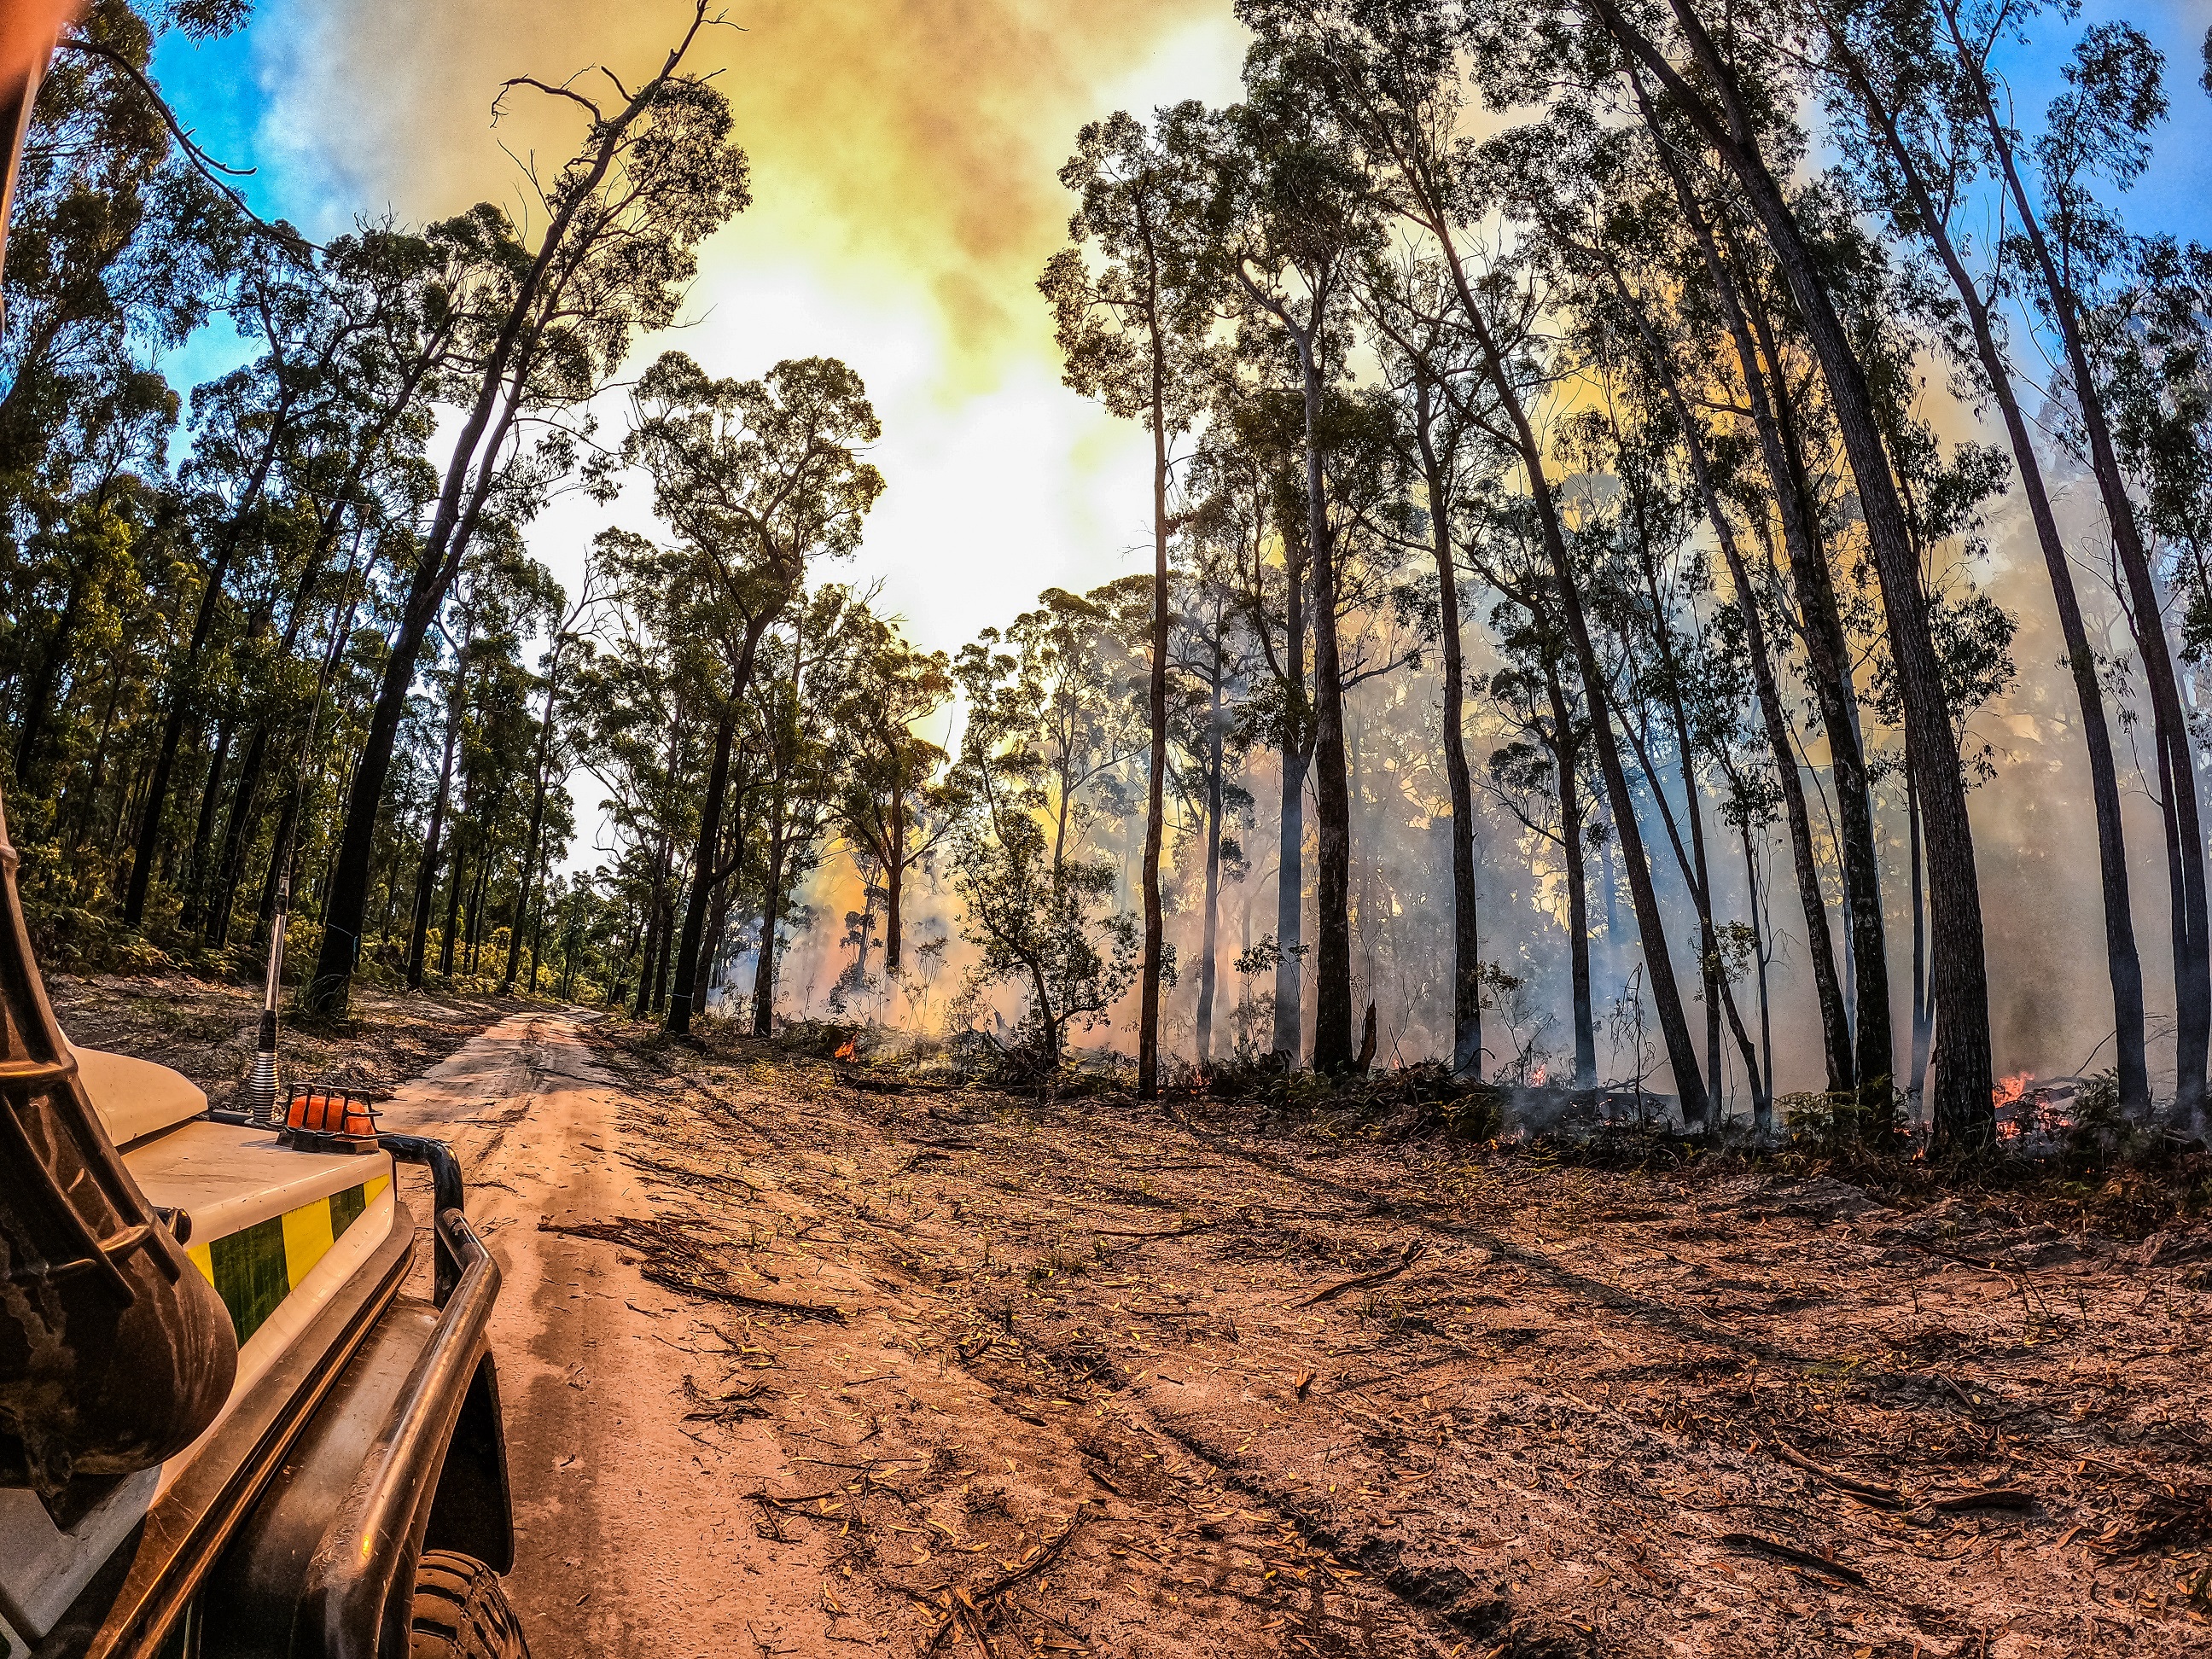 Planned burning underway in eastern Victoria